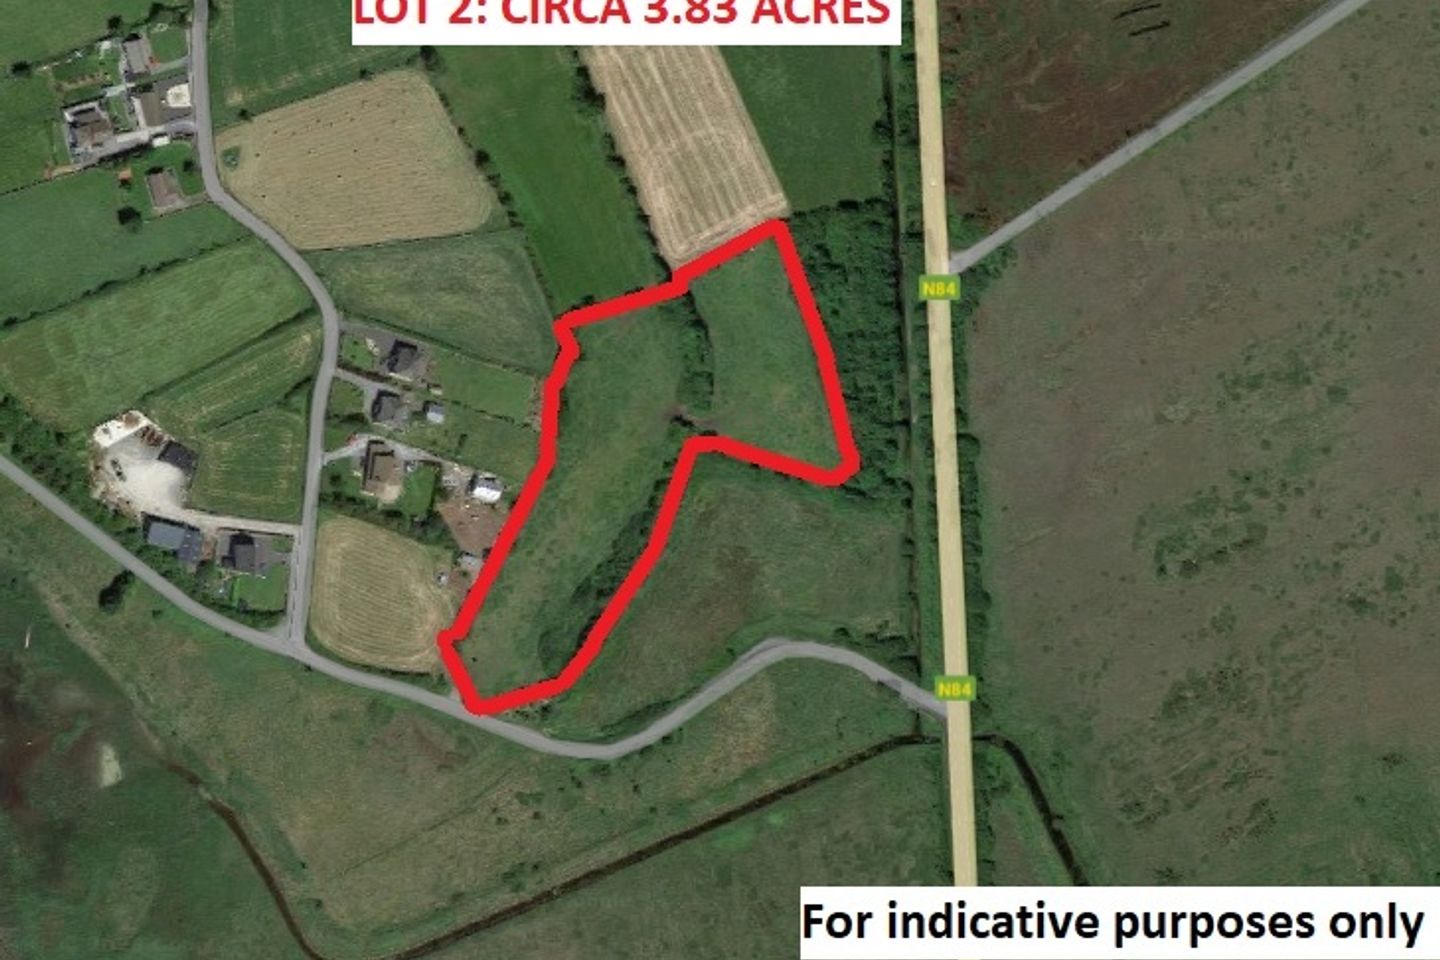 Lot 2 - circa 3.83 acres at Mace, Corrandulla, Co. Galway